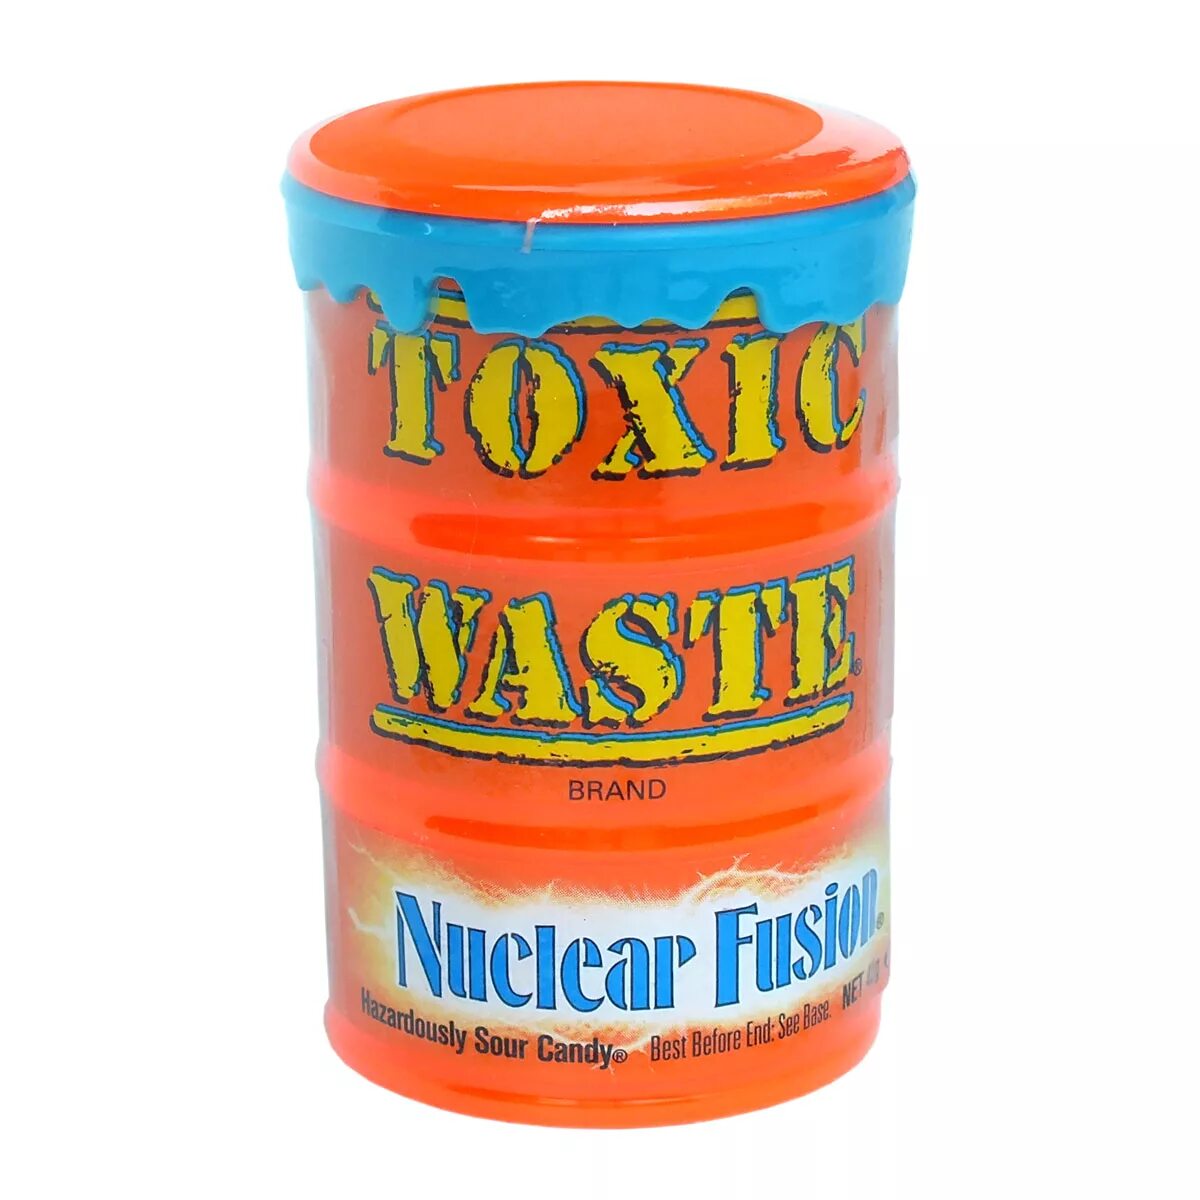 Самые кислые конфеты в мире Toxic waste. Toxic waste nuclear Fusion. Кислые конфеты Токсик. Леденцы Toxic waste.